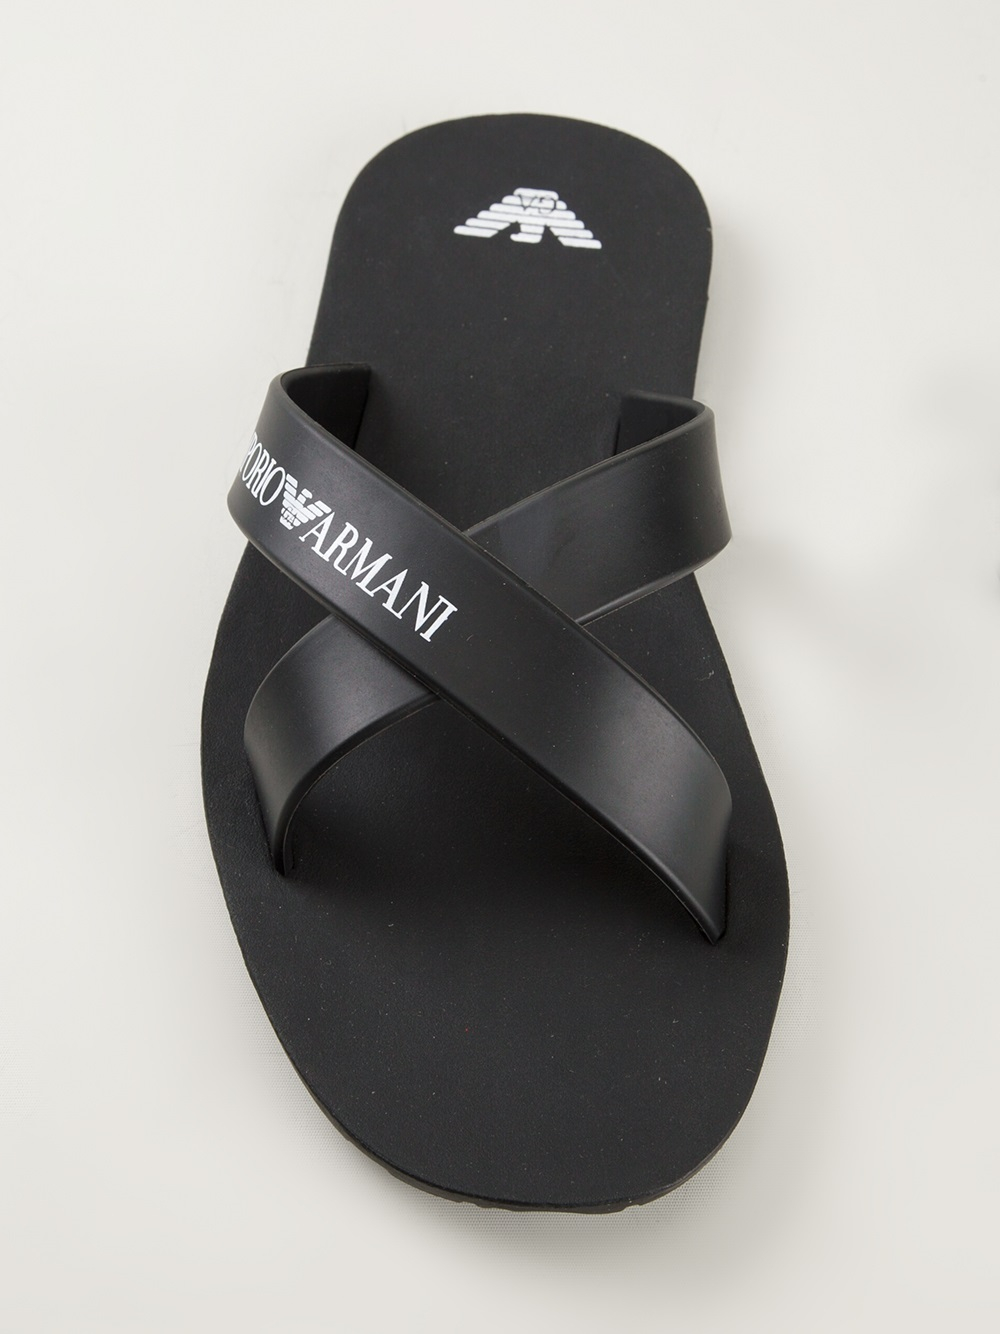 Emporio Armani Beach Sandals in Black for Men - Lyst